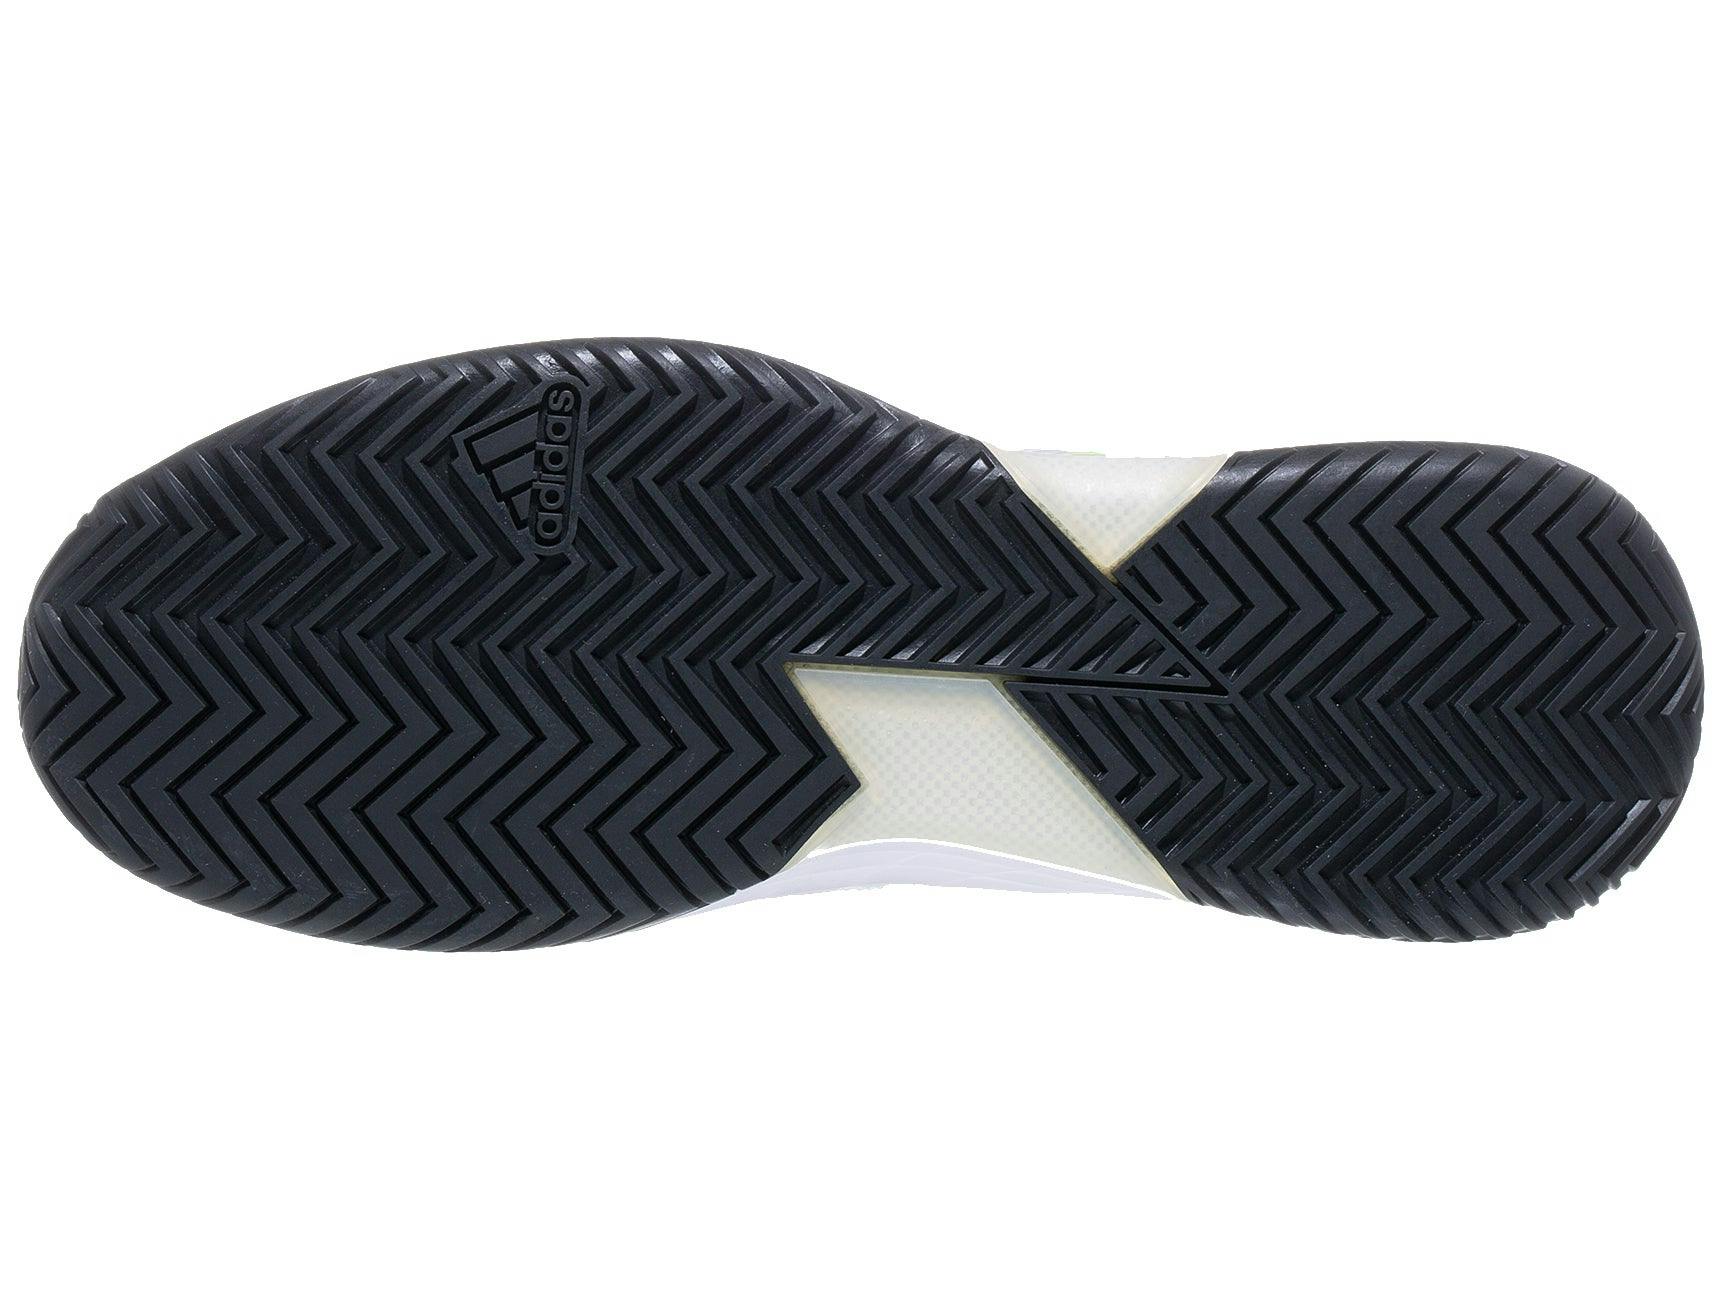 Adidas Men's Adizero Ubersonic 4 Tennis Shoes